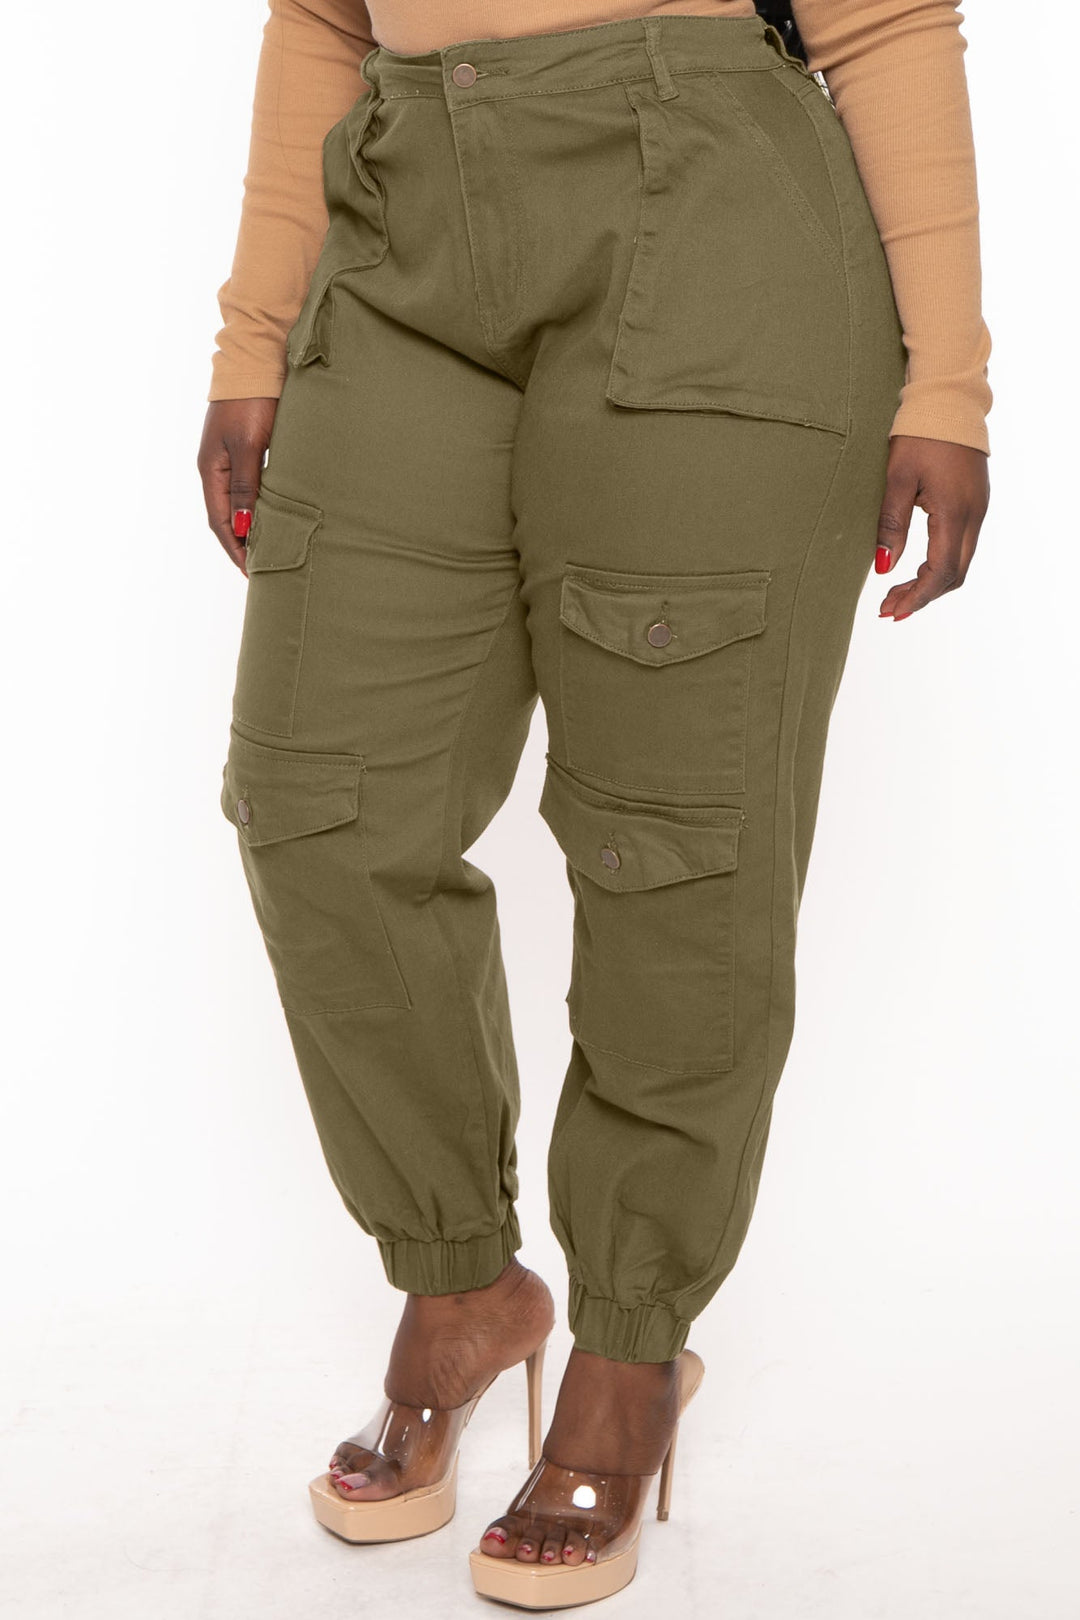 American Bazi Jeans 1X / Olive Plus Size  High Rise Multi Pocket Jogger -Olive